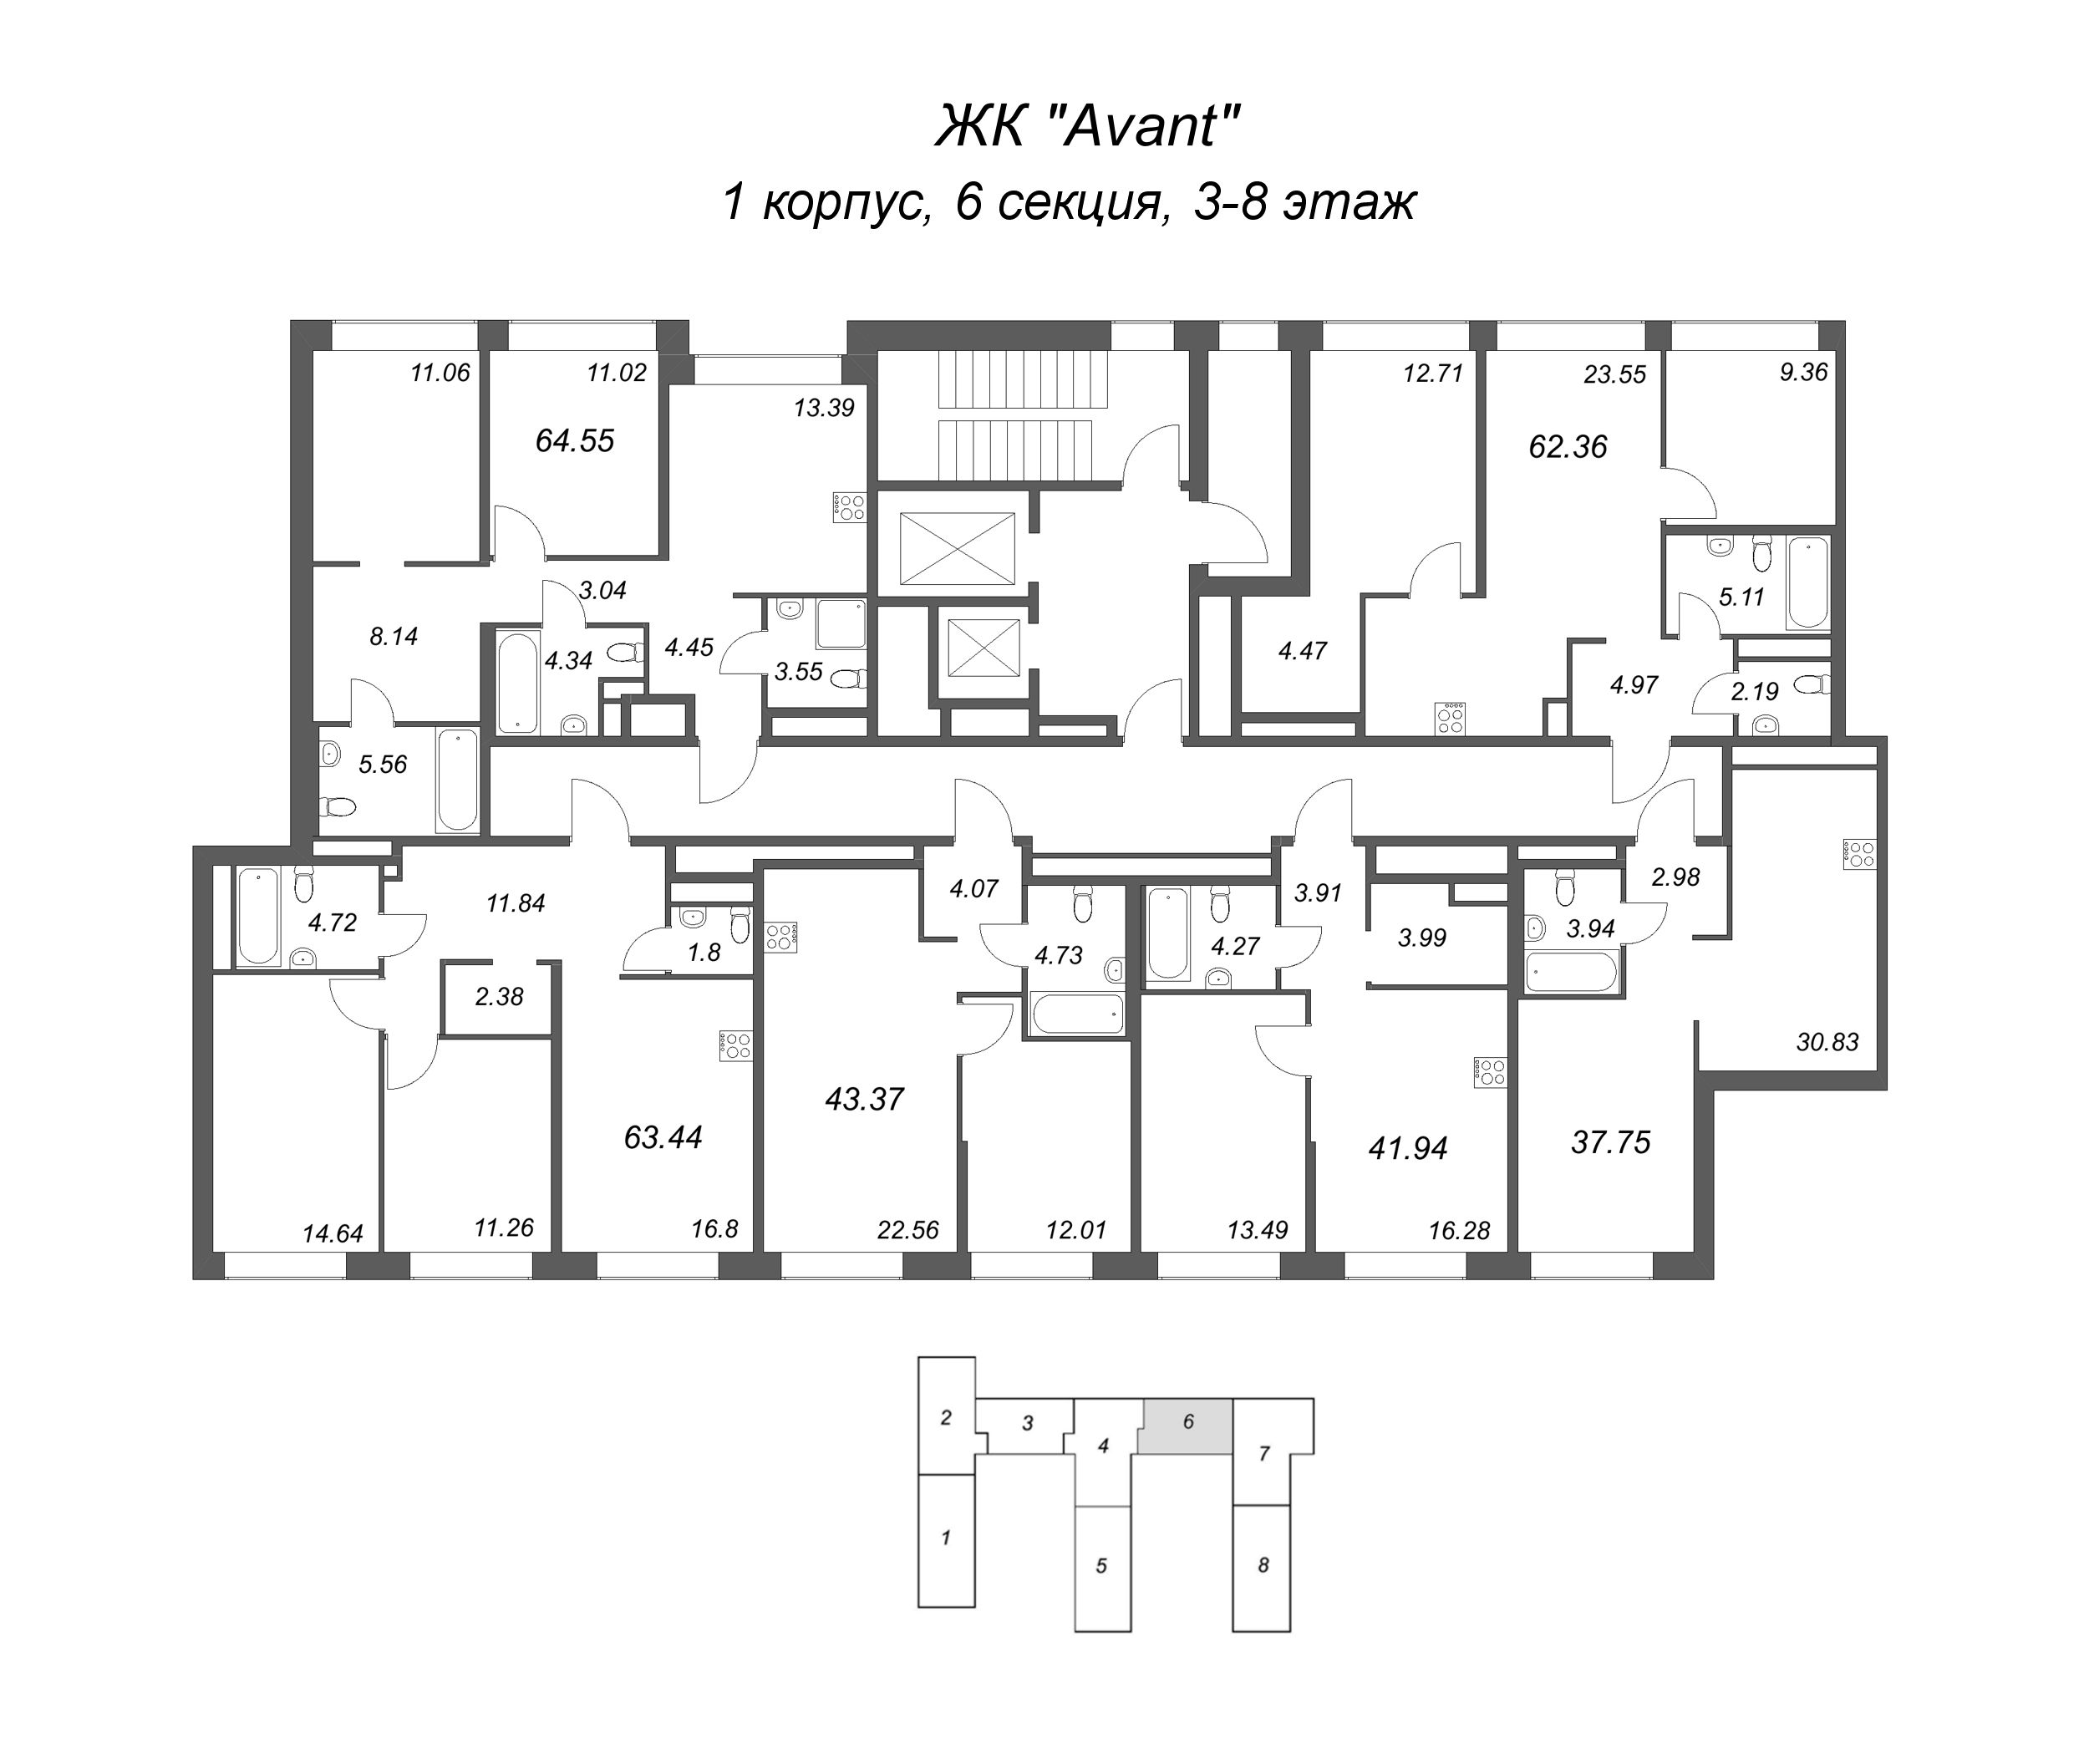 3-комнатная (Евро) квартира, 62.36 м² - планировка этажа